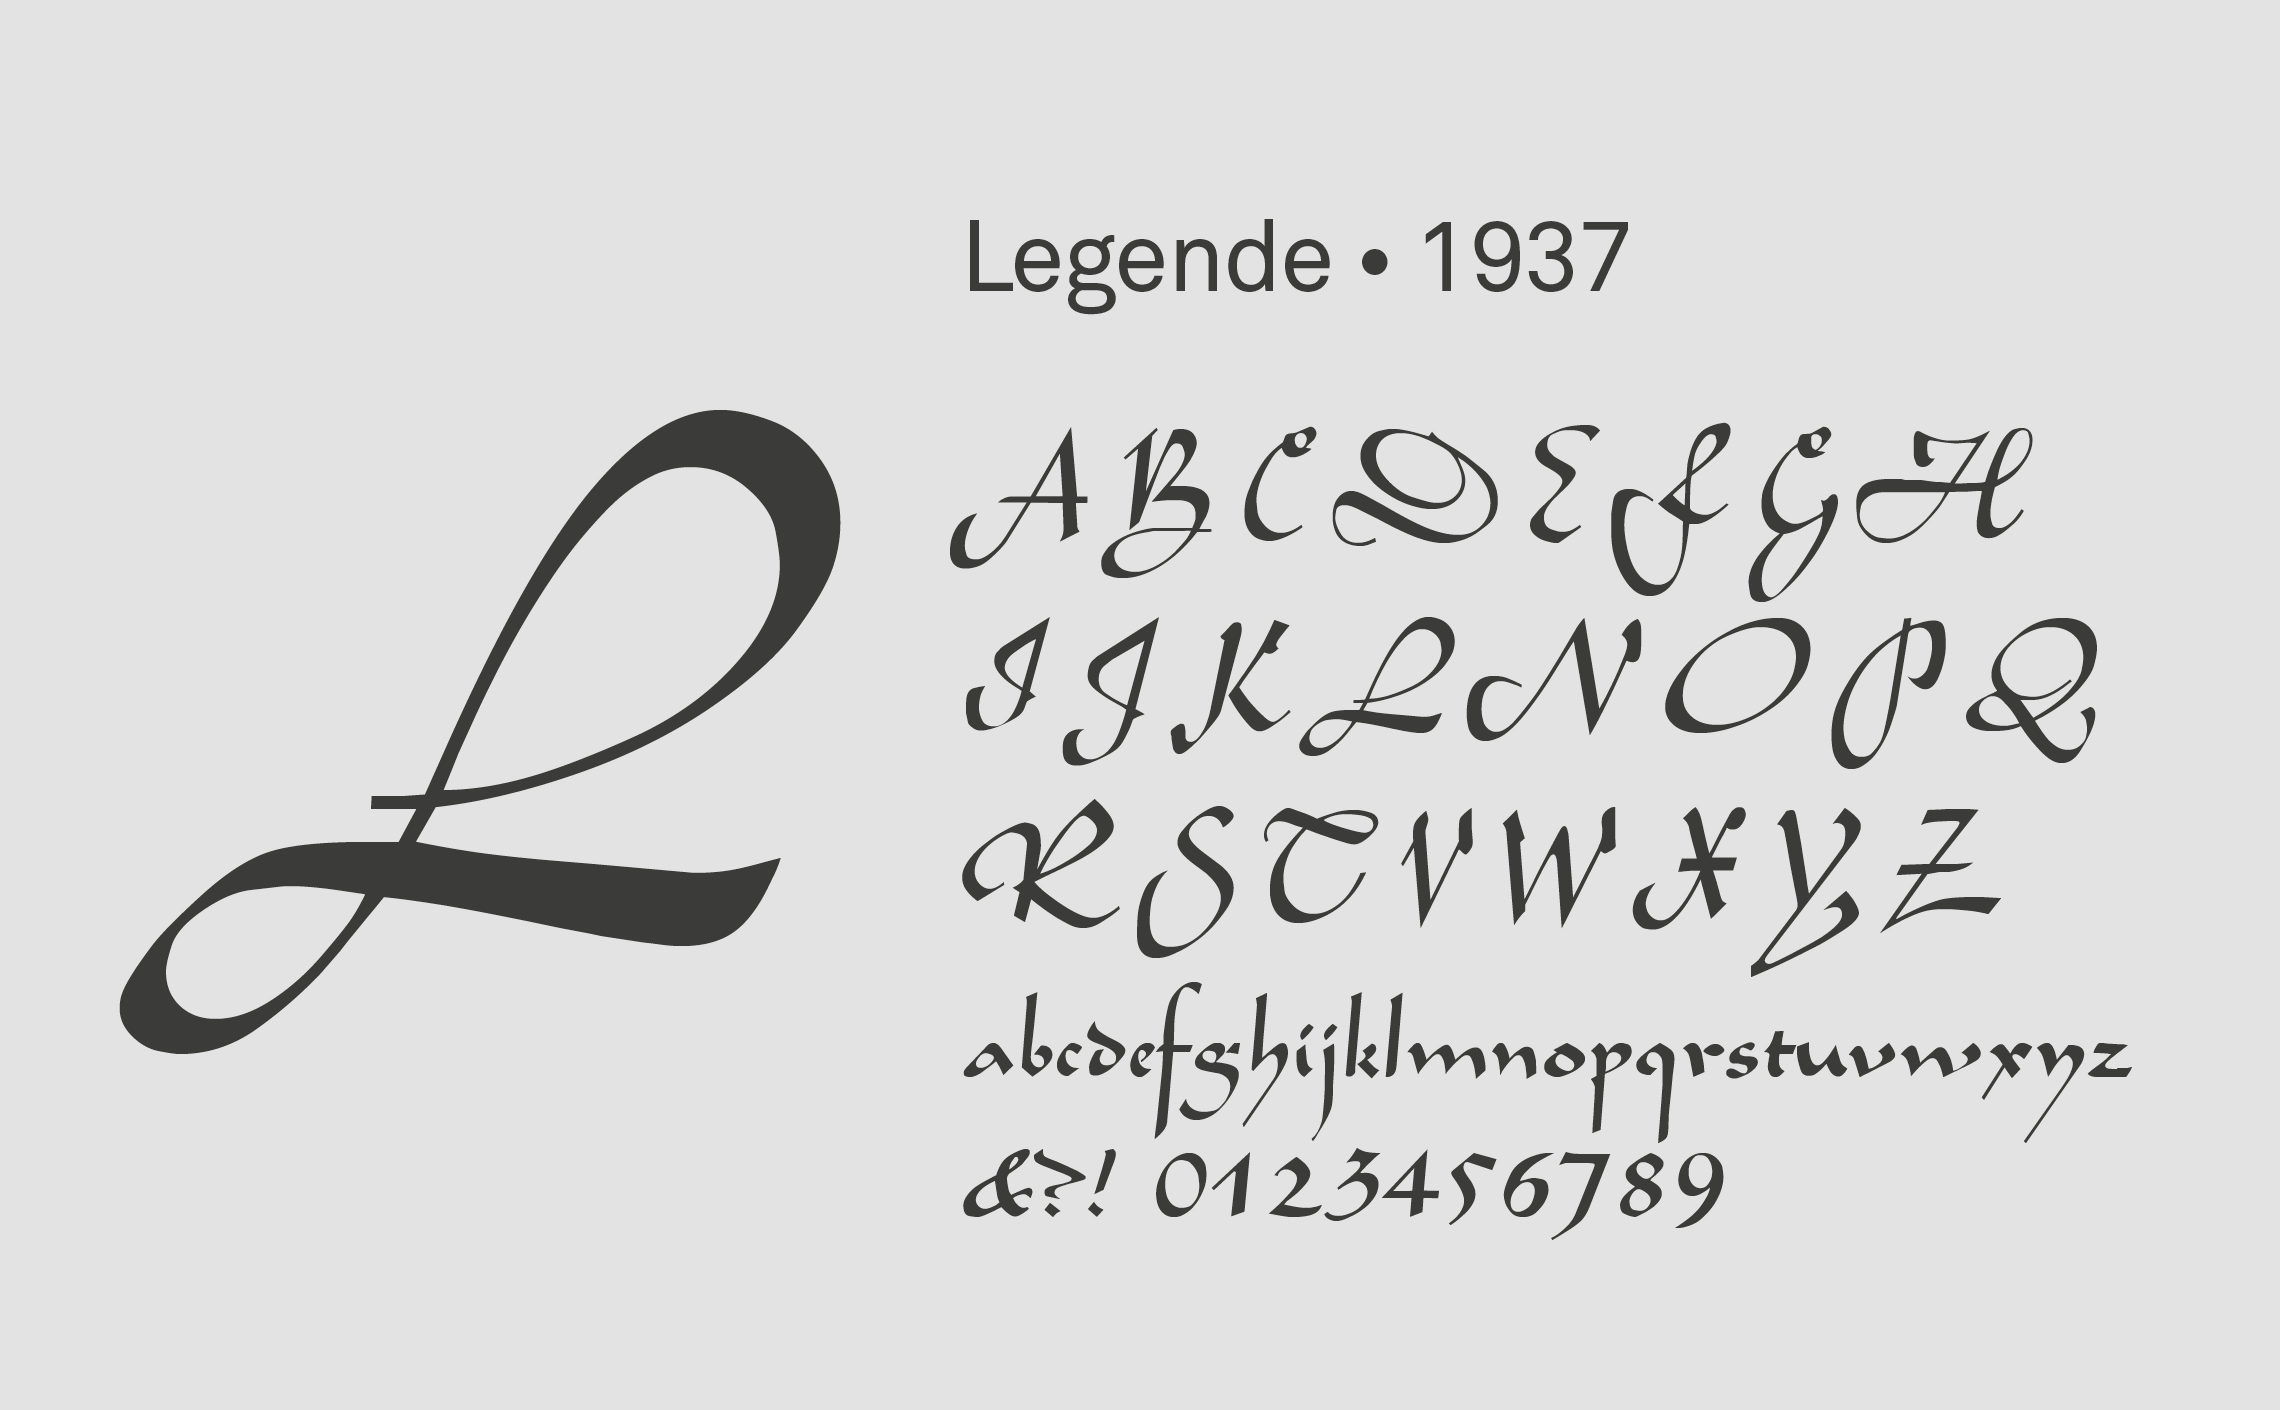 typographie-legende-1937